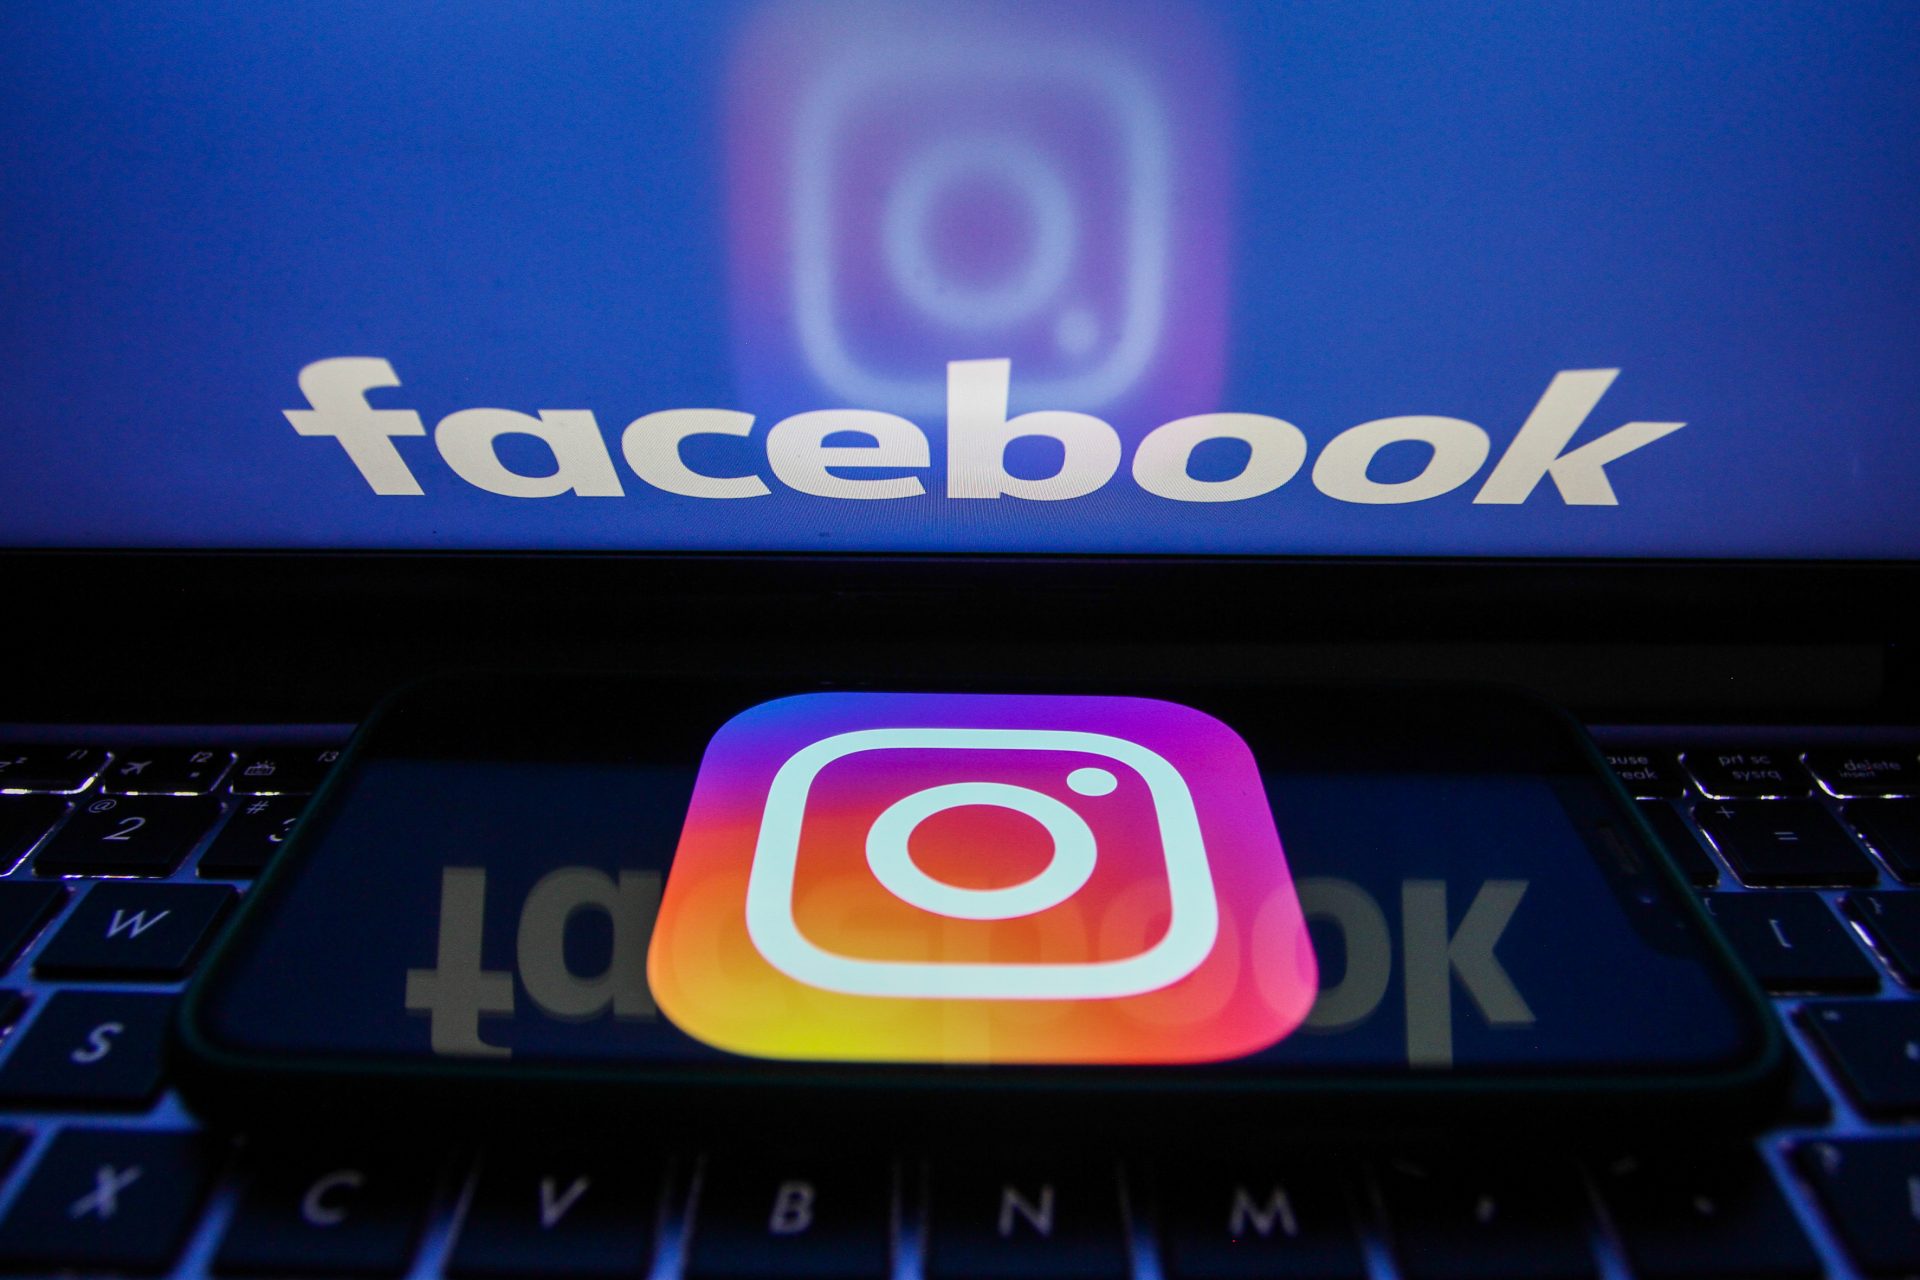 instagram káros facebook